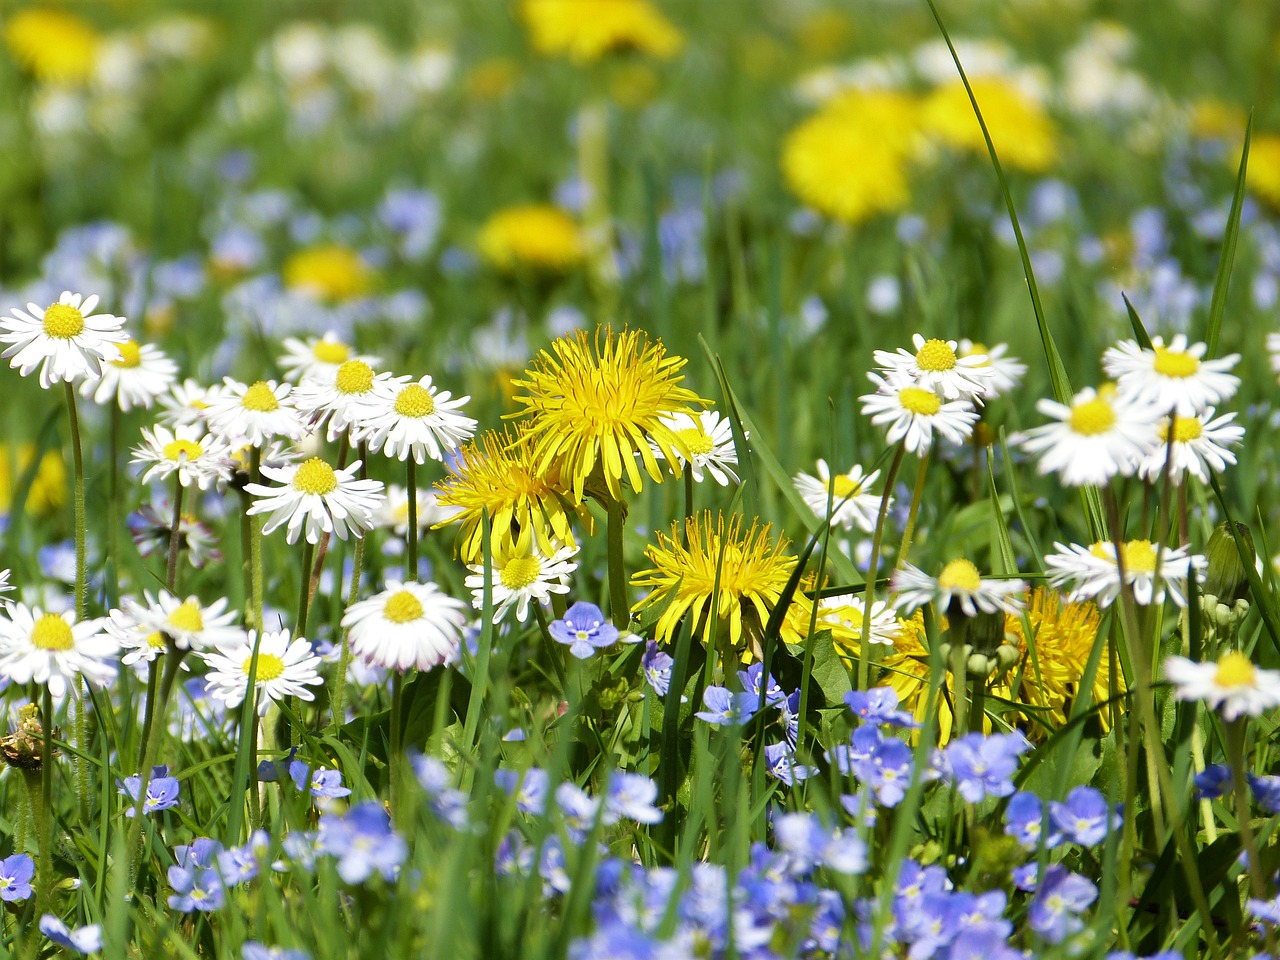 Benefits of Organic Fertilizers on Flowers